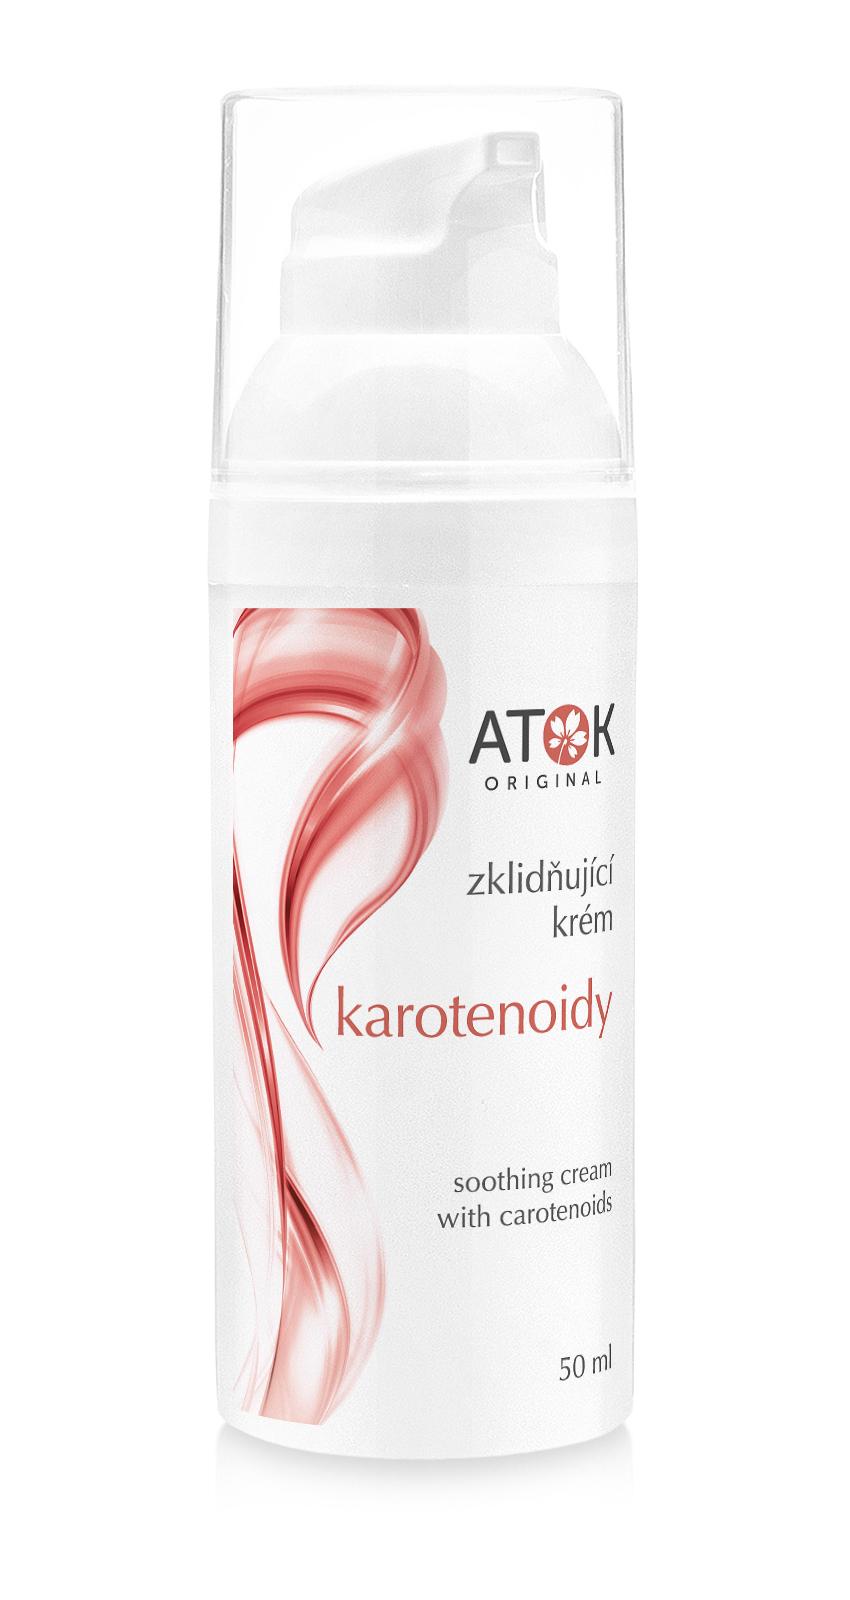 Upokojujúci krém s karotenoidmi - Original ATOK Obsah: 50 ml